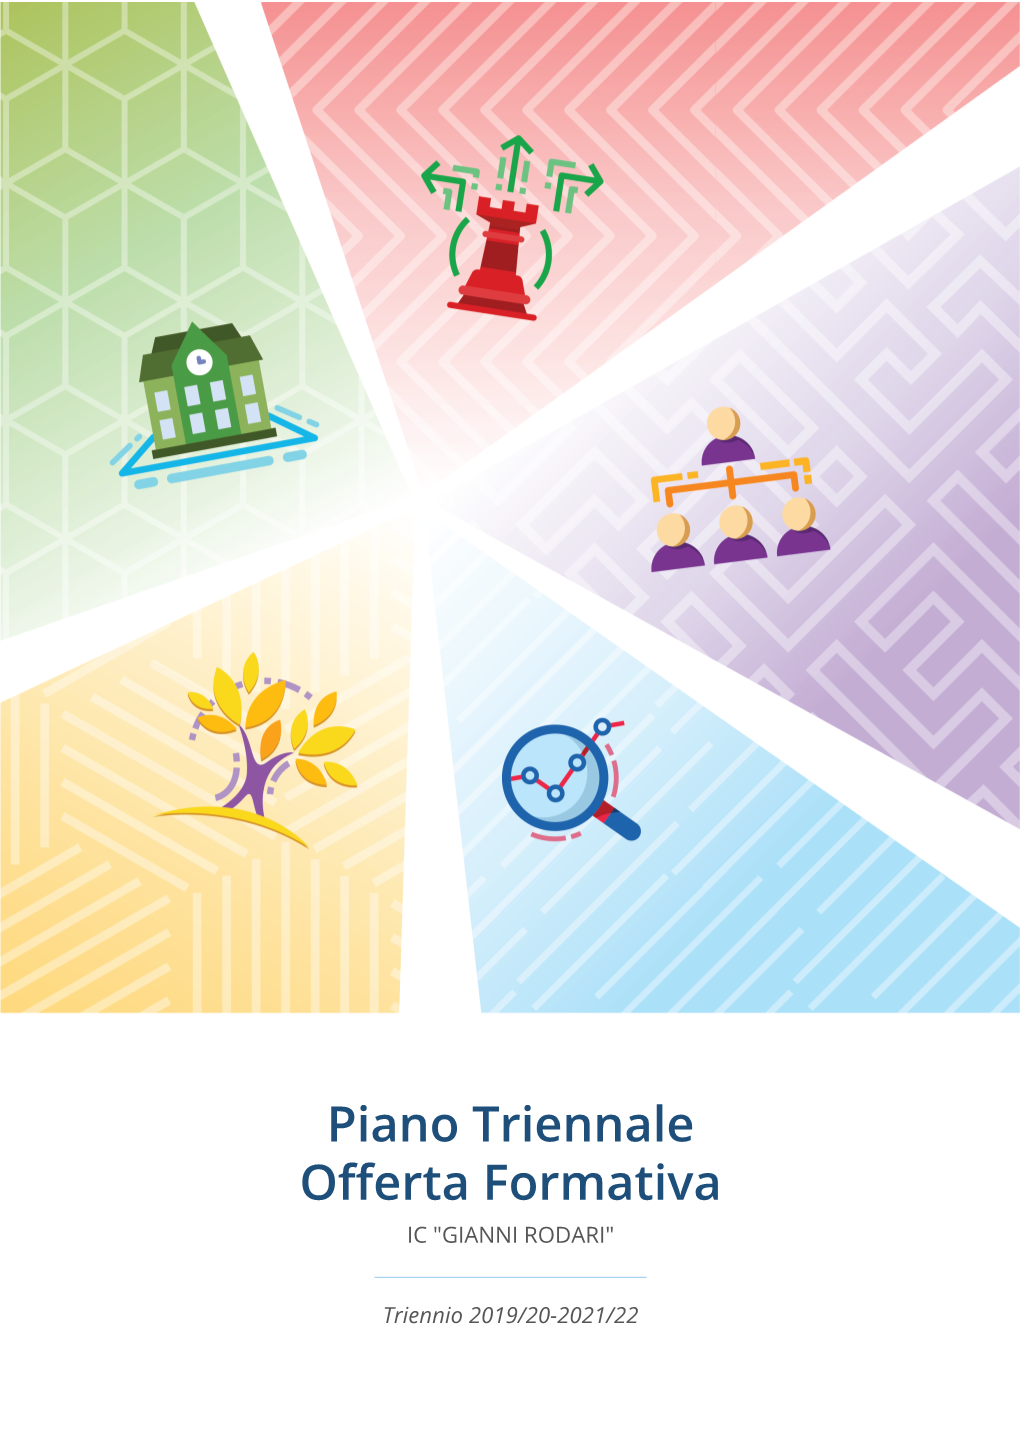 Piano Triennale Offerta Formativa IC "GIANNI RODARI"